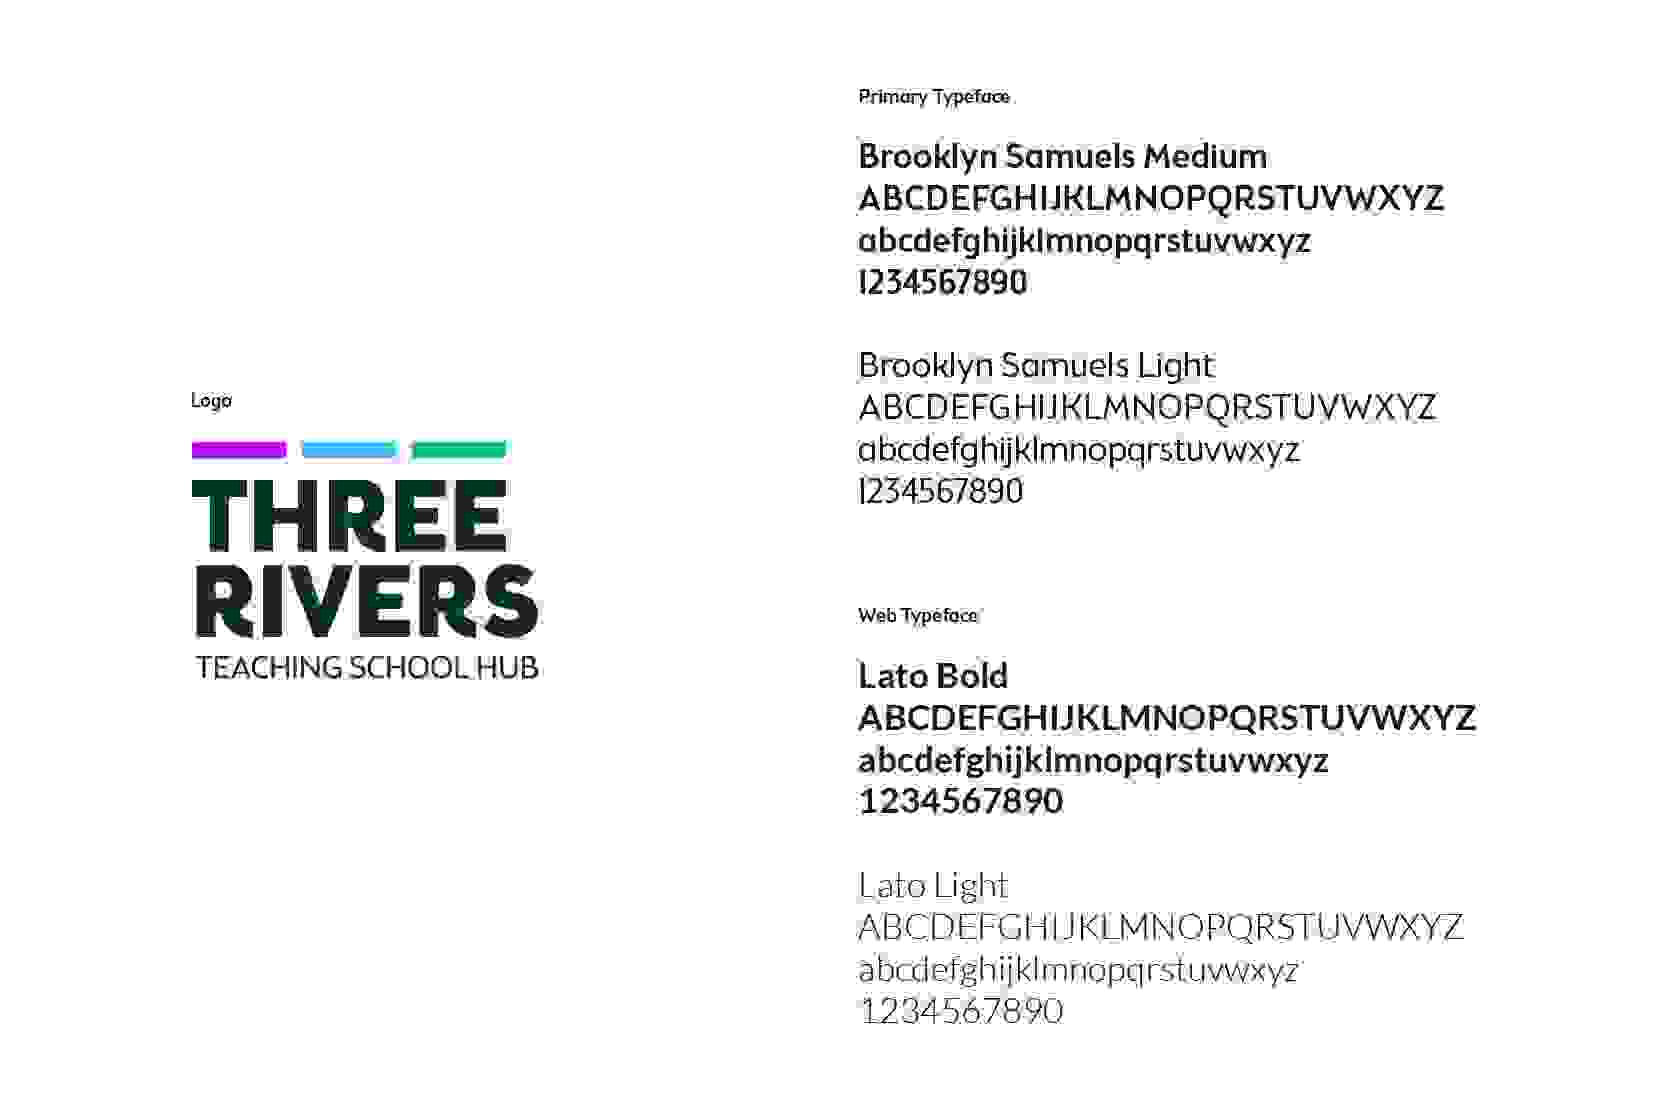 Teaching School Hub fonts and typeface with Three Rivers Teaching School hub logo (3RTSH)